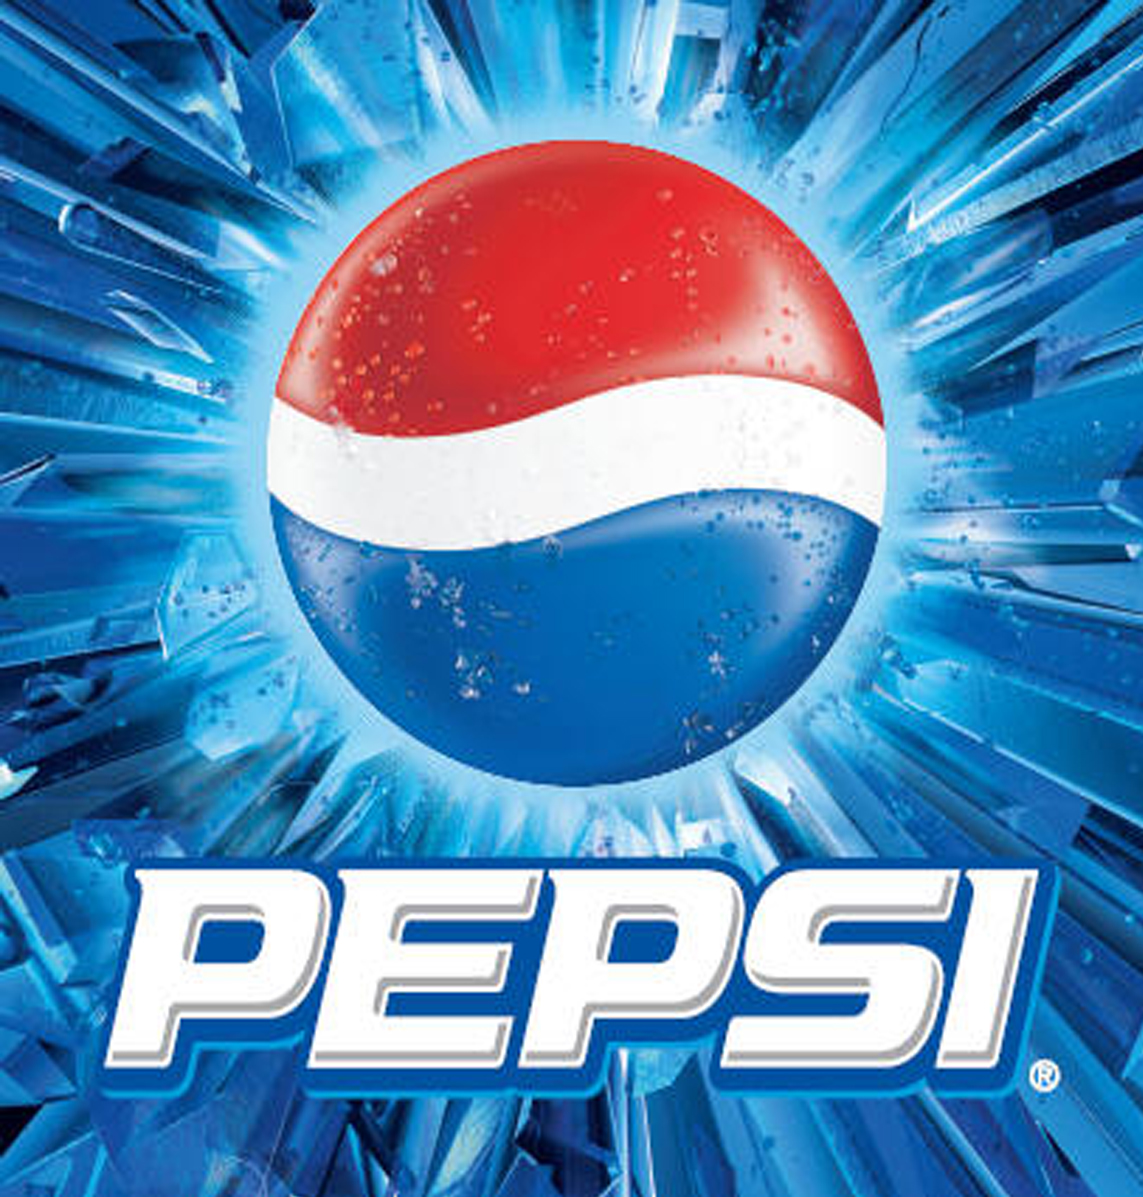 History of Pepsi | History of Branding